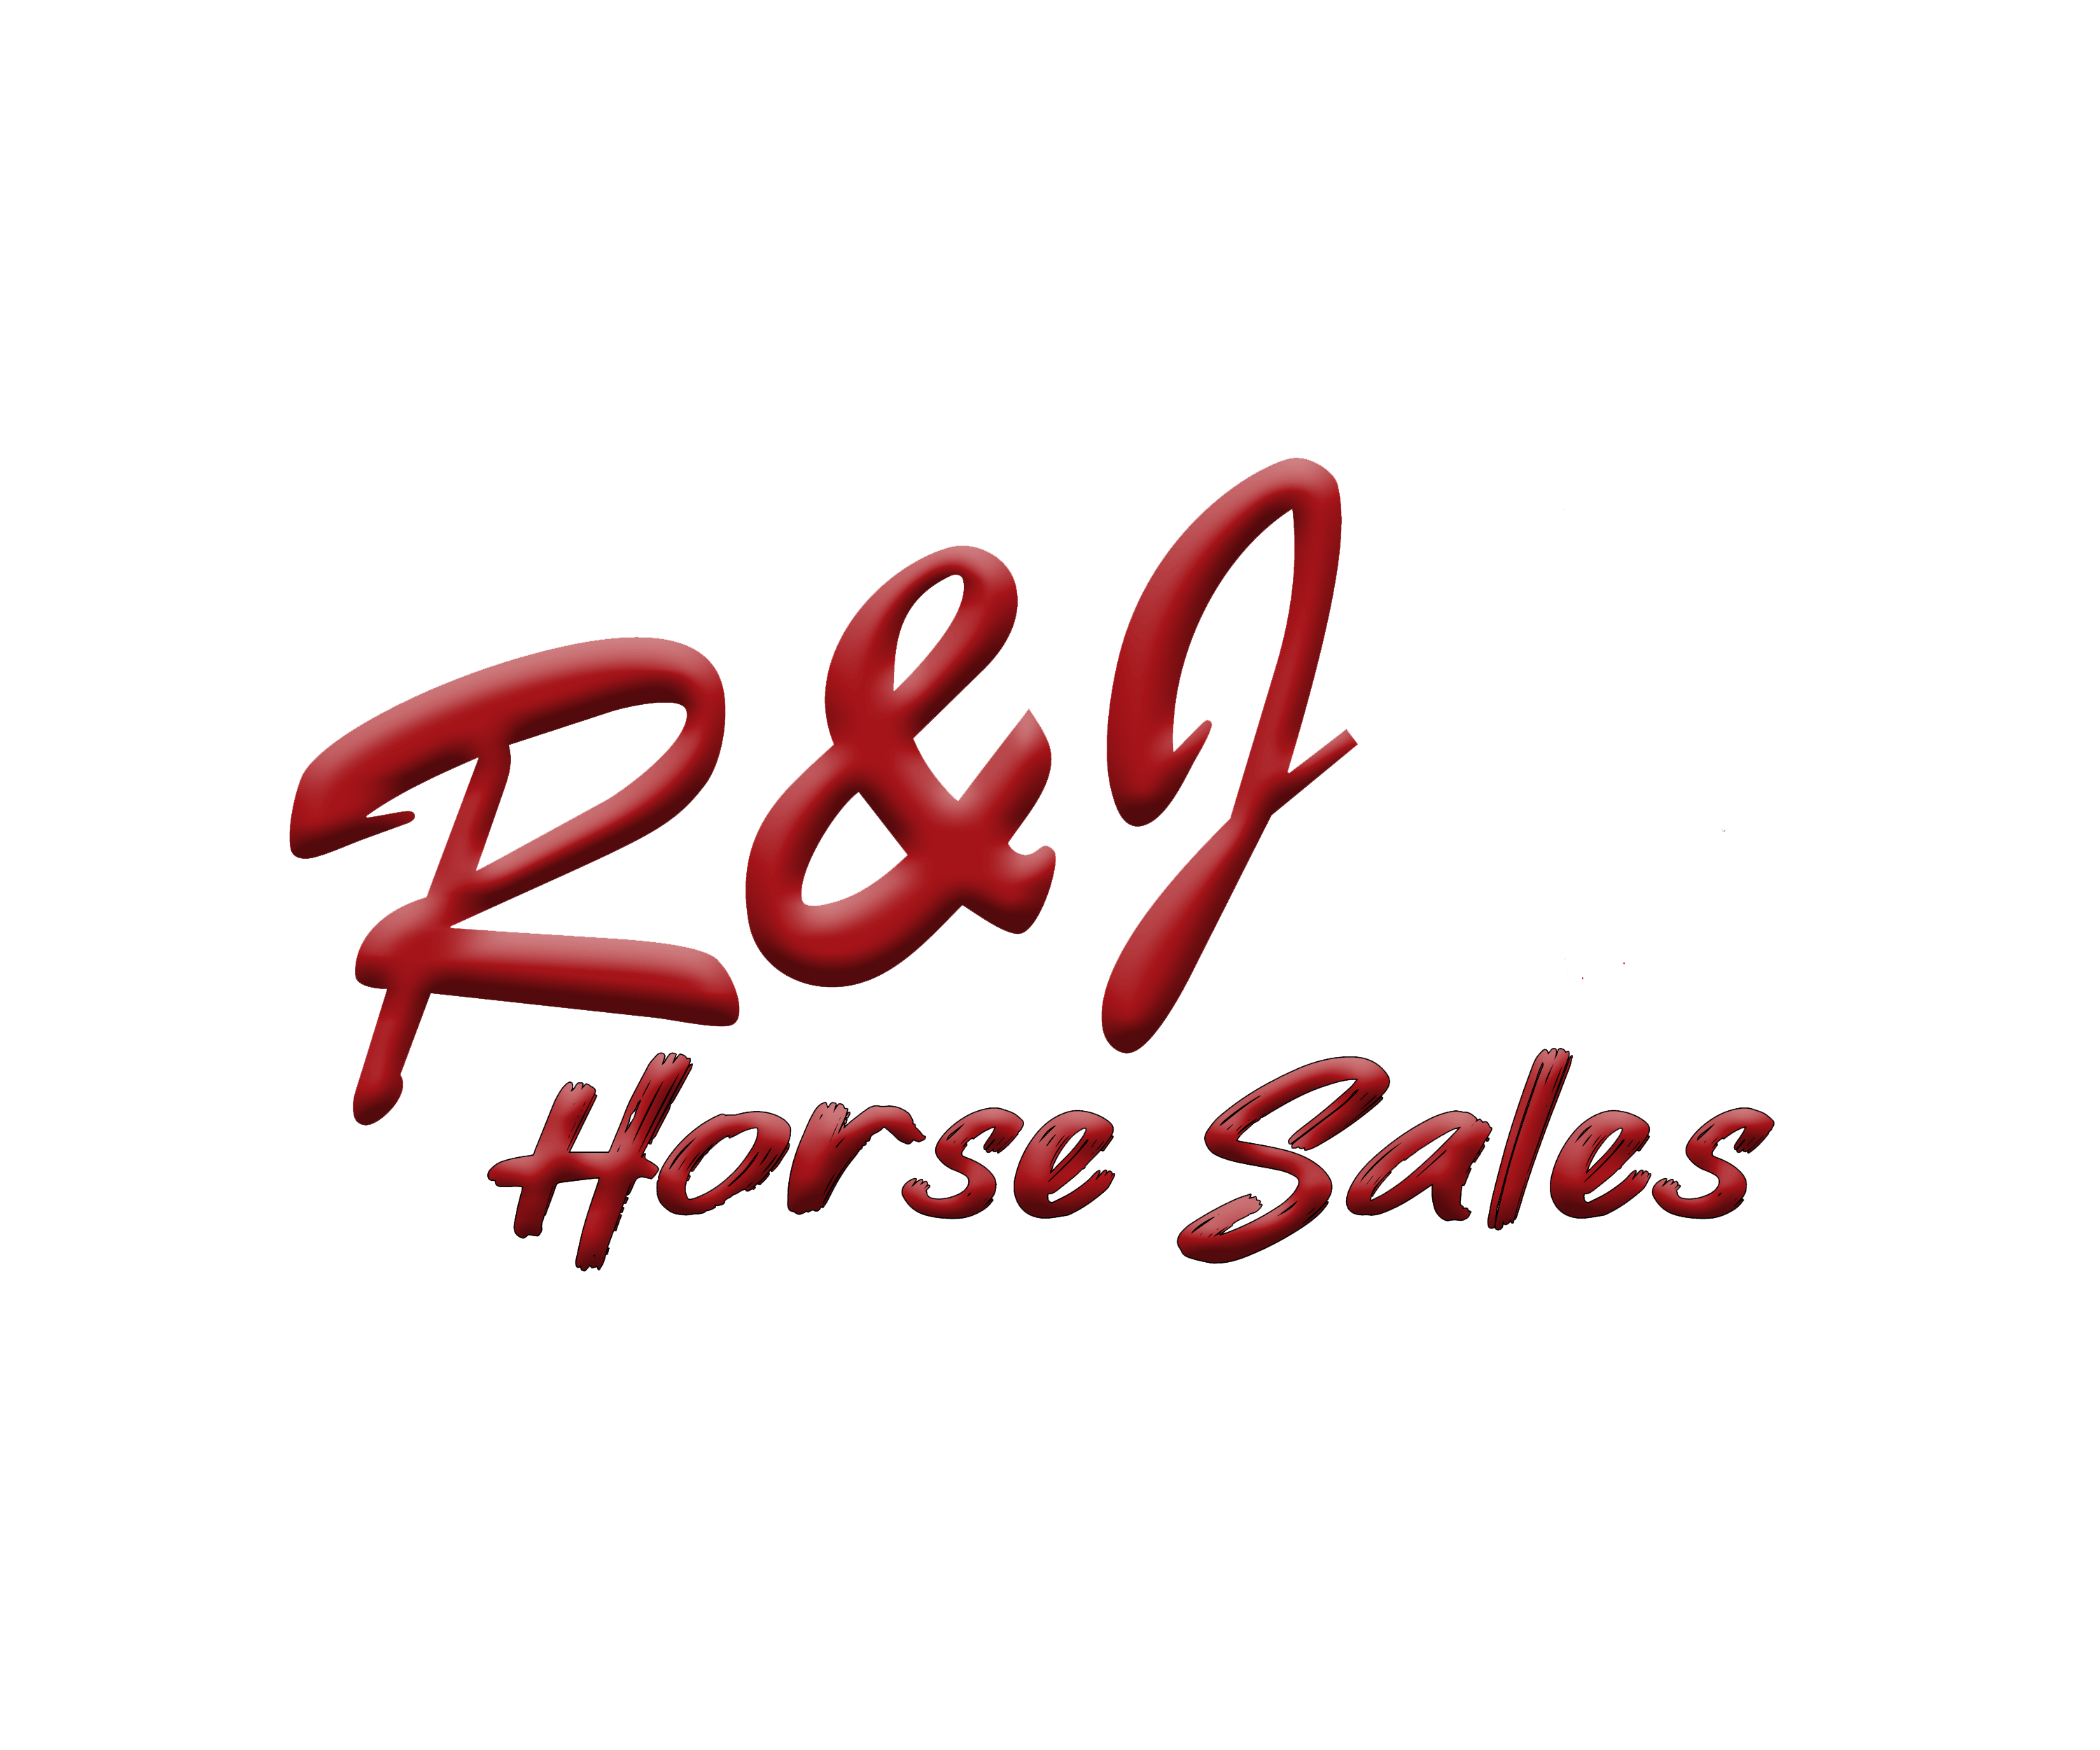 R & j horse sales logo.